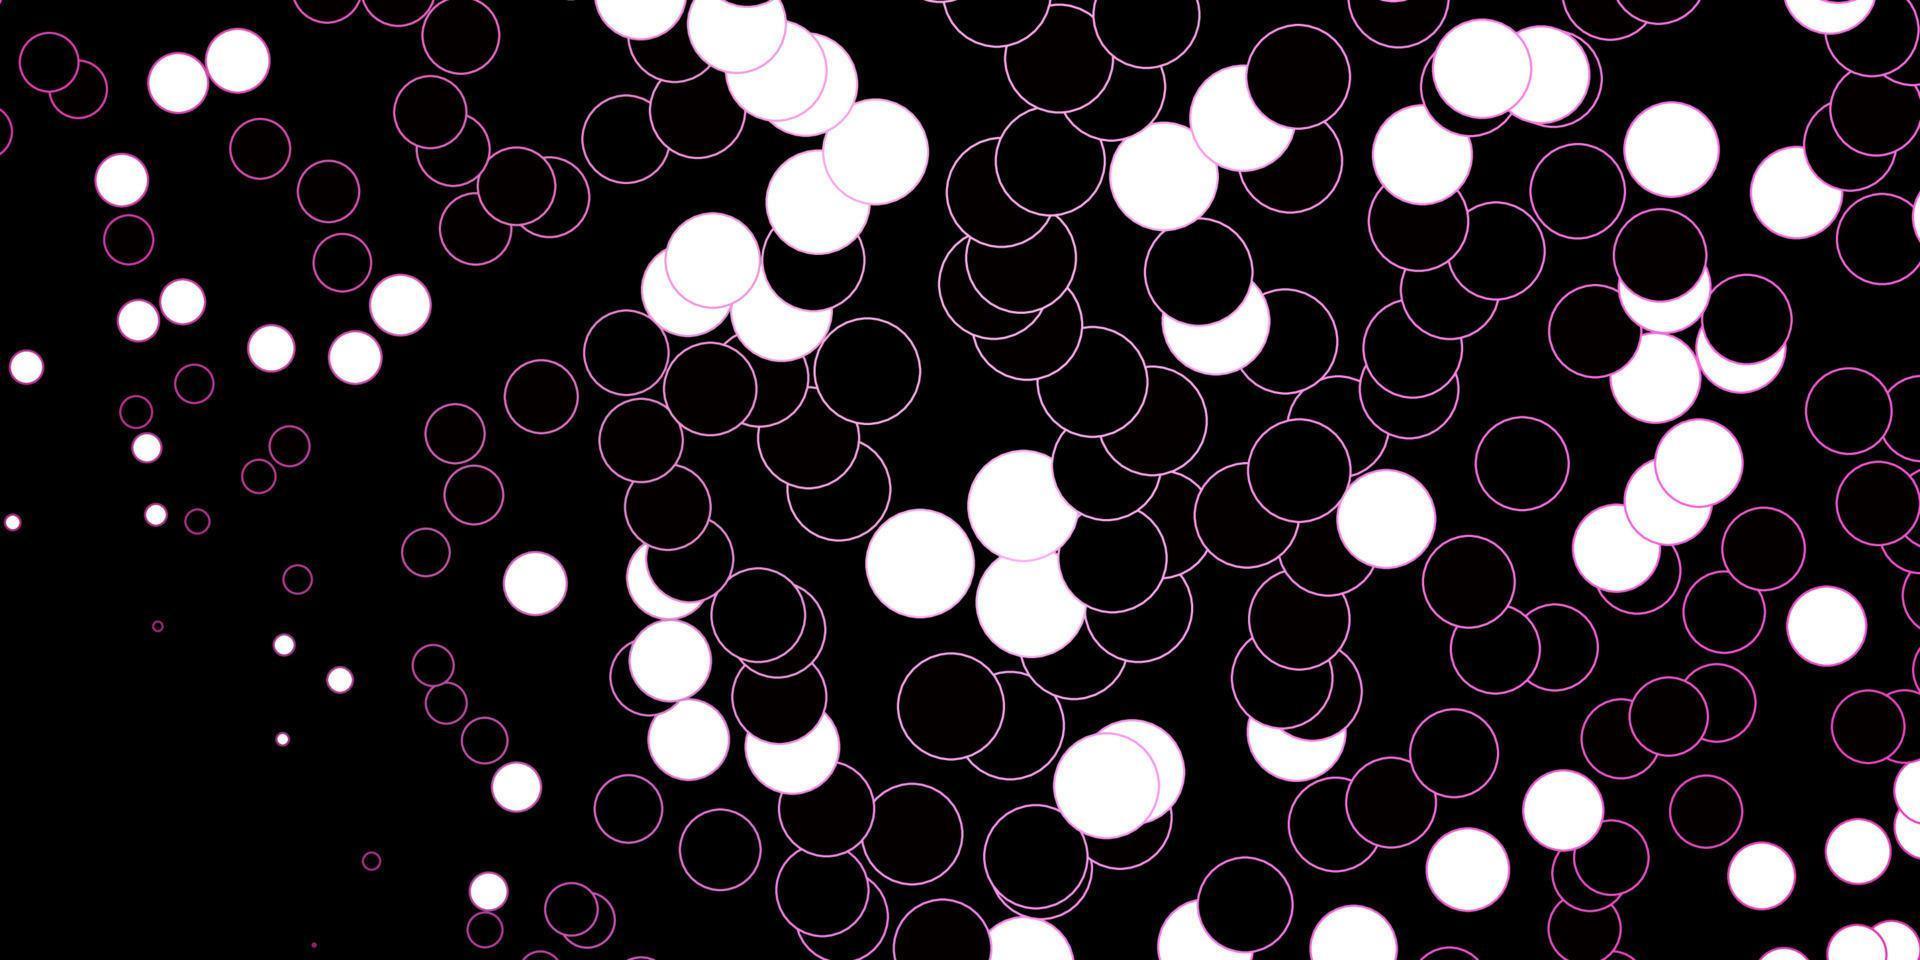 Dark Pink vector layout with circle shapes.